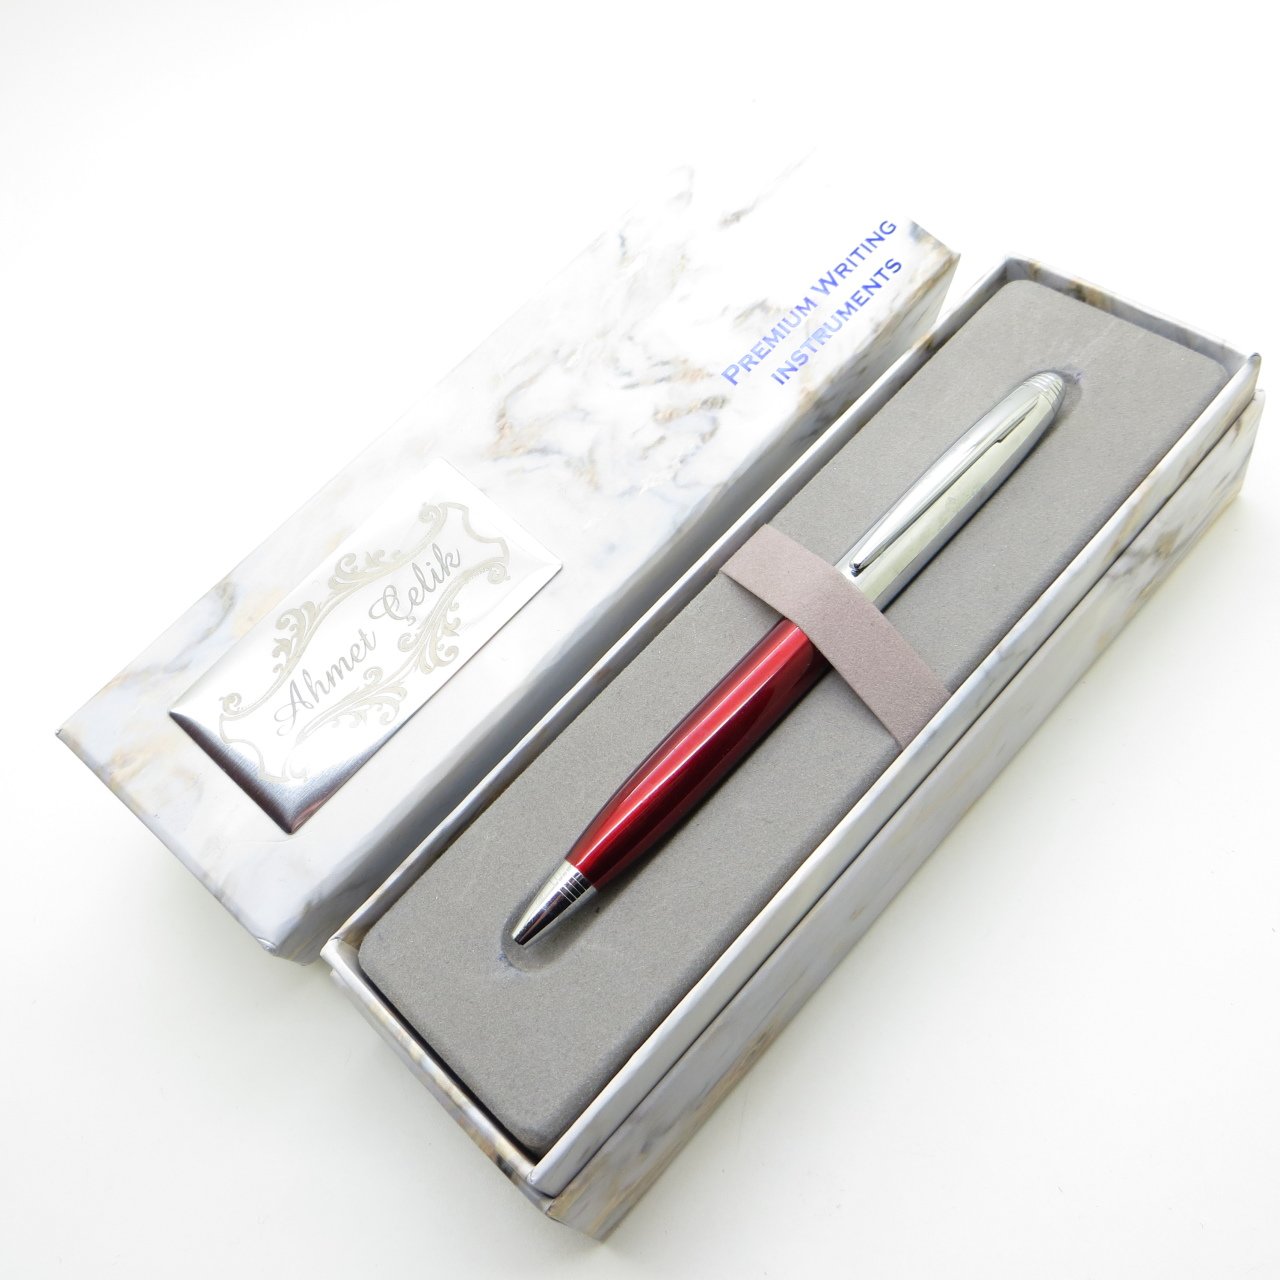 Wings Marble T531 Kırmızı Krom Desenli Tükenmez Kalem | İsme Özel Kalem | Hediyelik Kalem